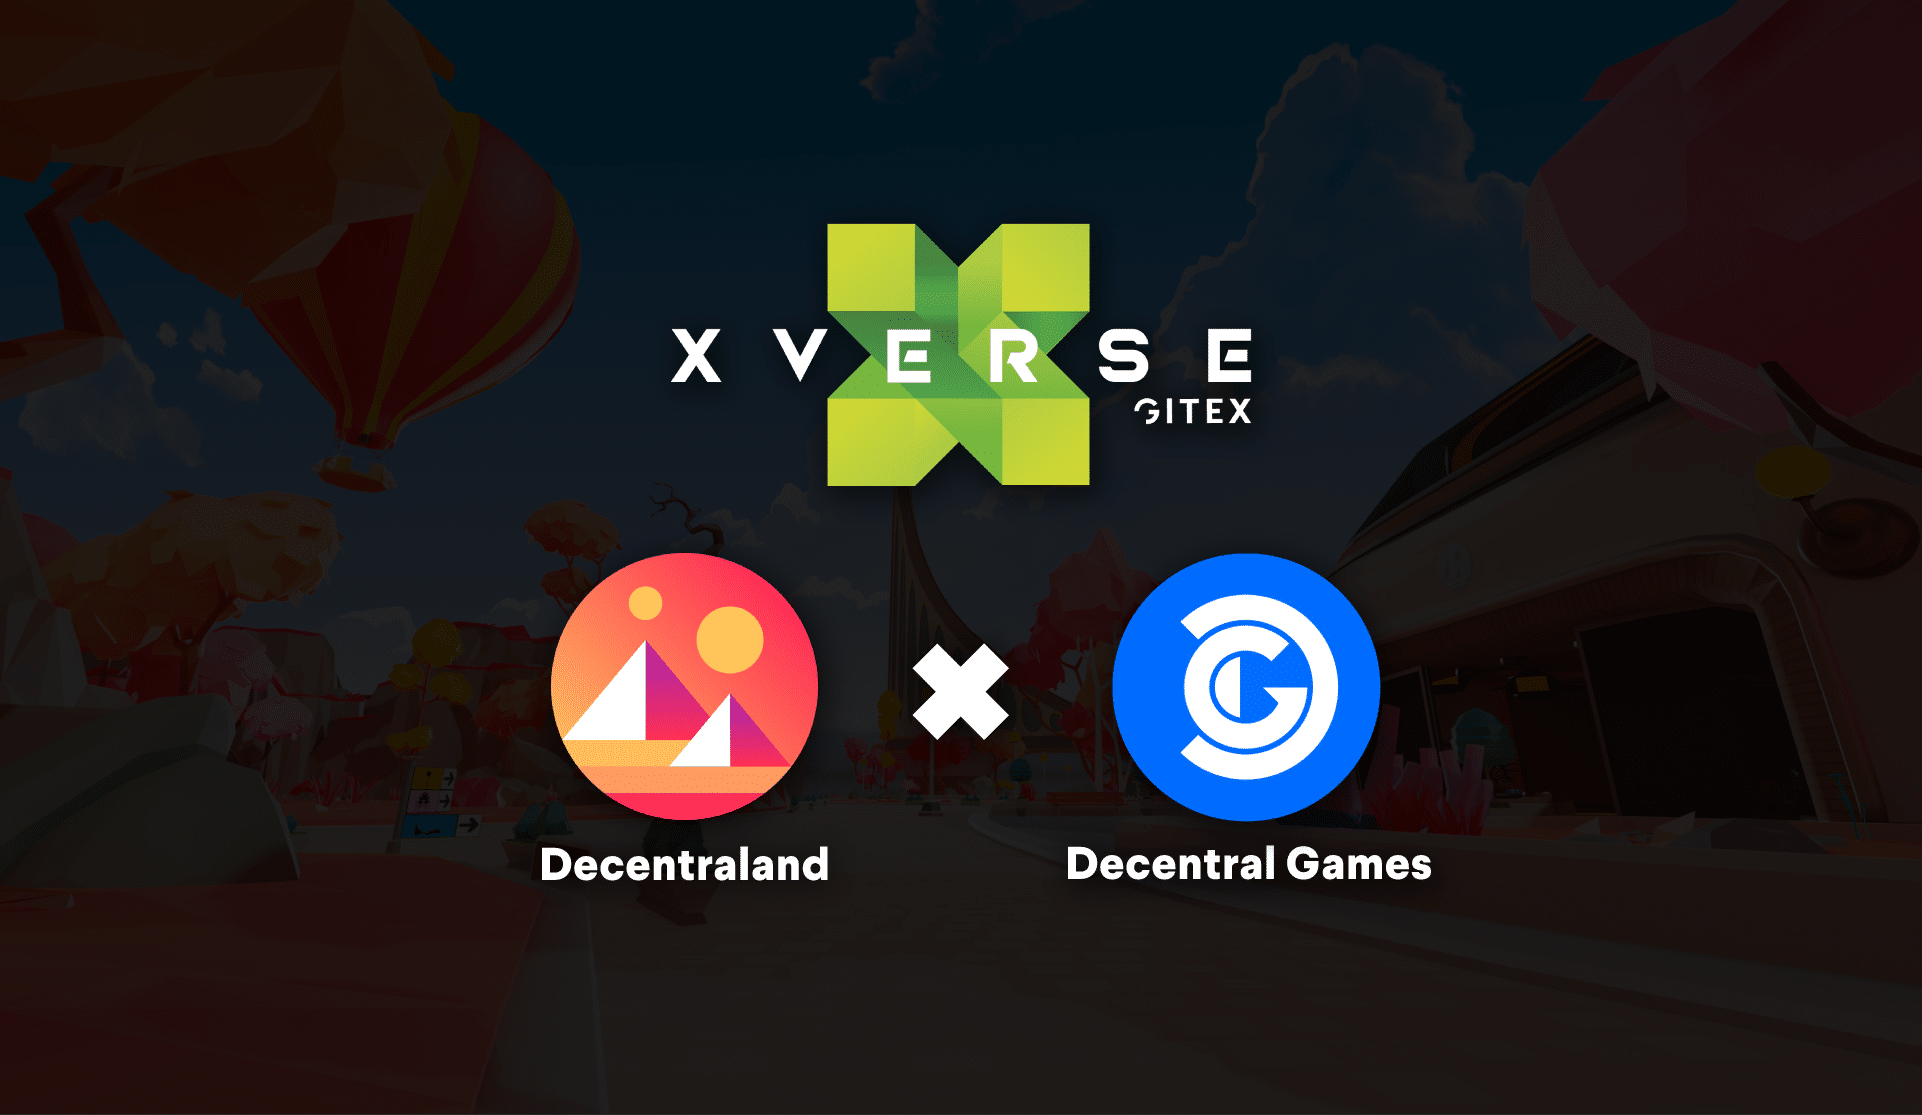 X-Verse, Decentraland, and Decentral Games logos